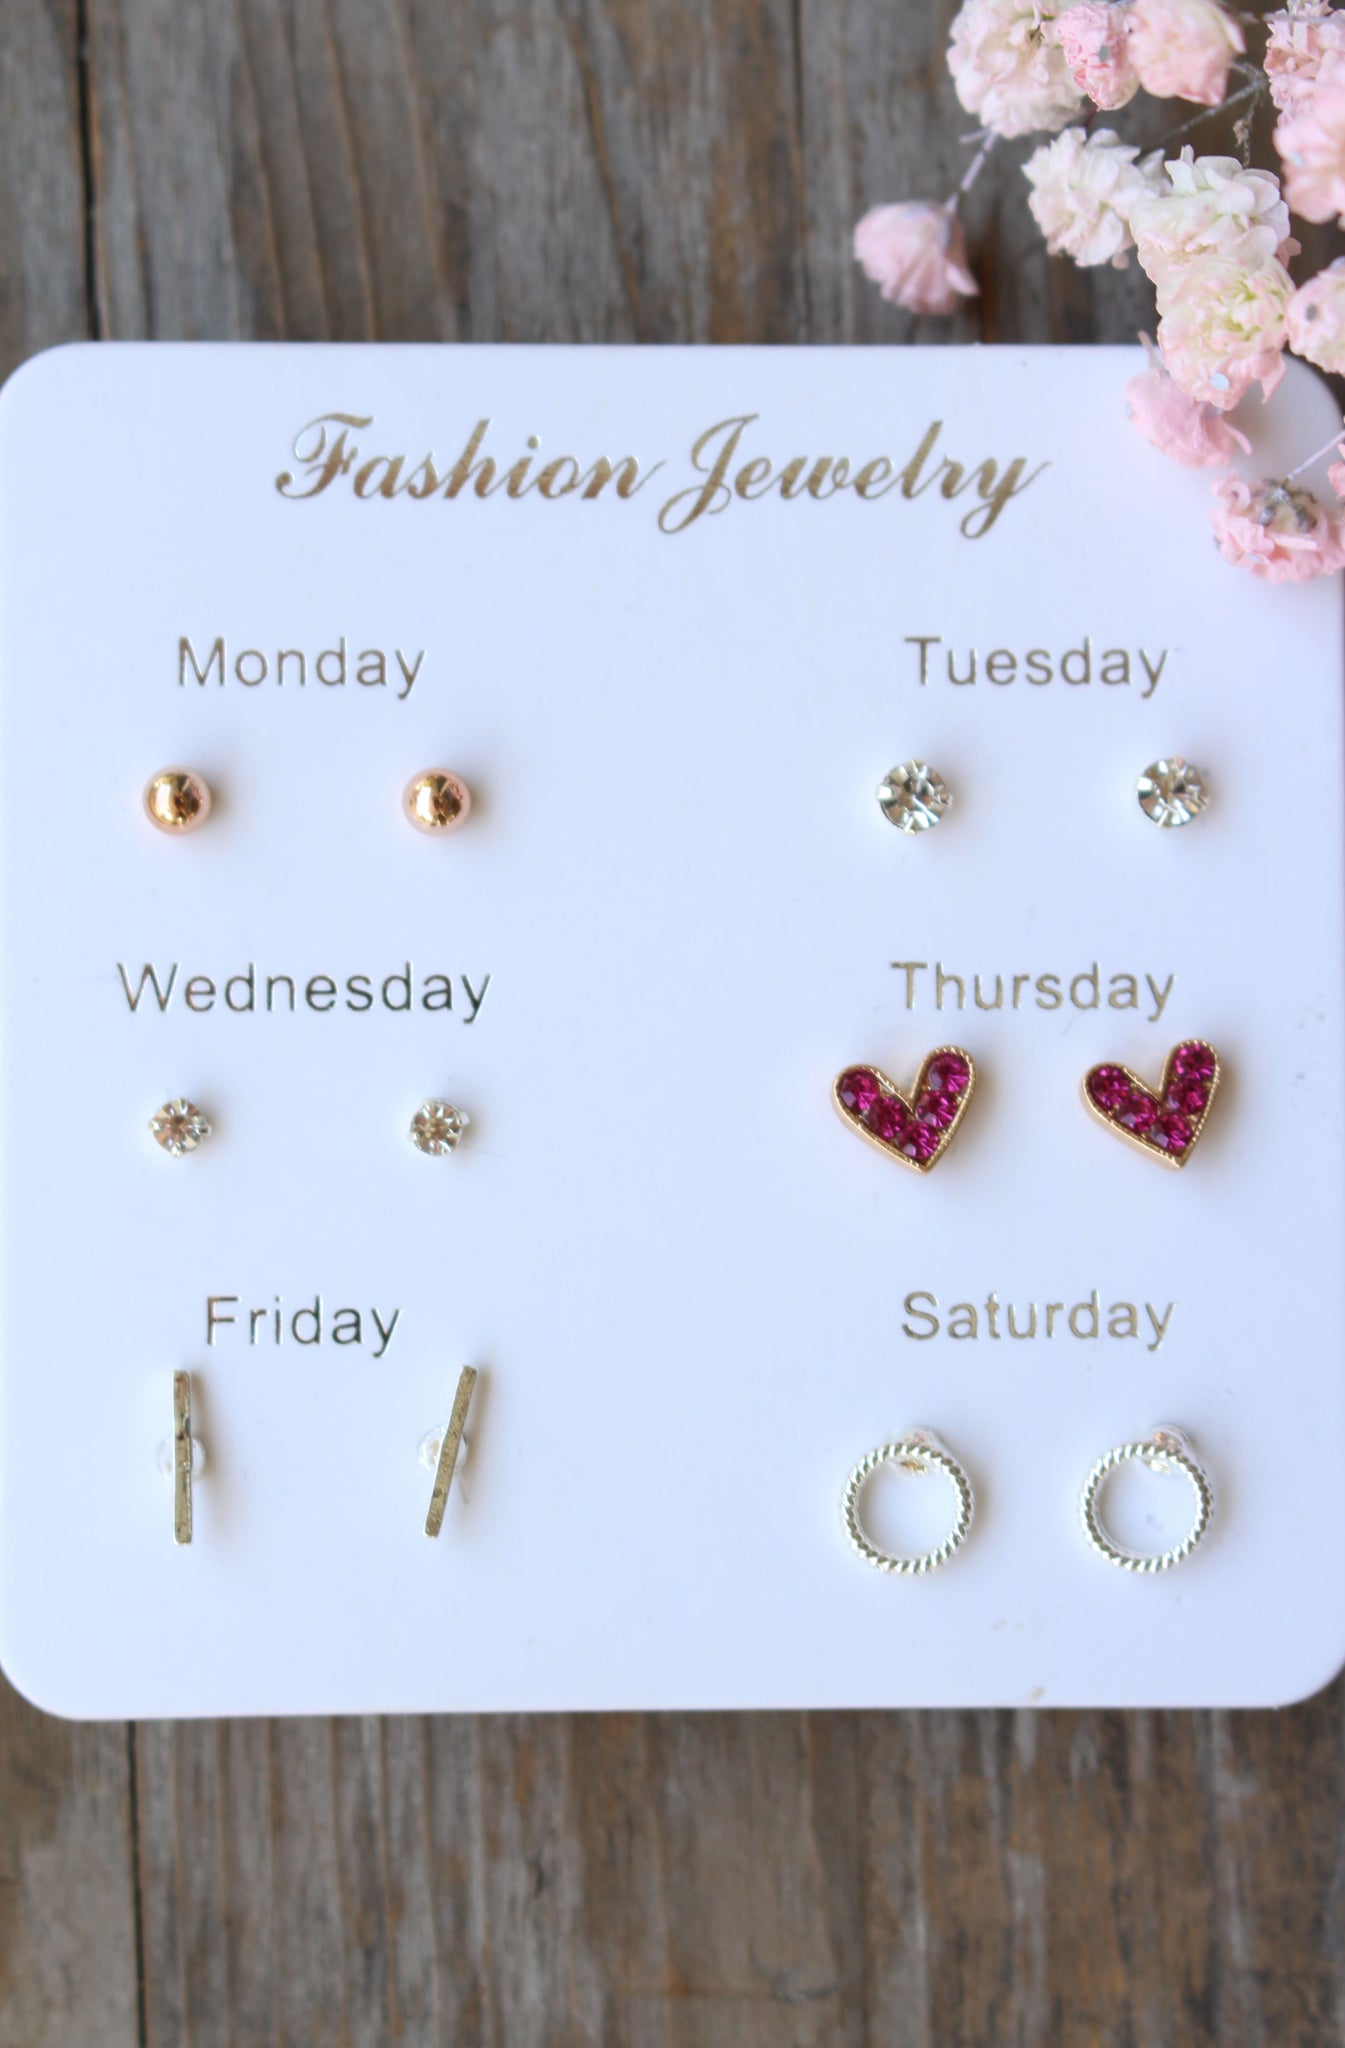 Girlfriend Jewelry Set, Heart Necklace and Earring Set | Custom Heart Design